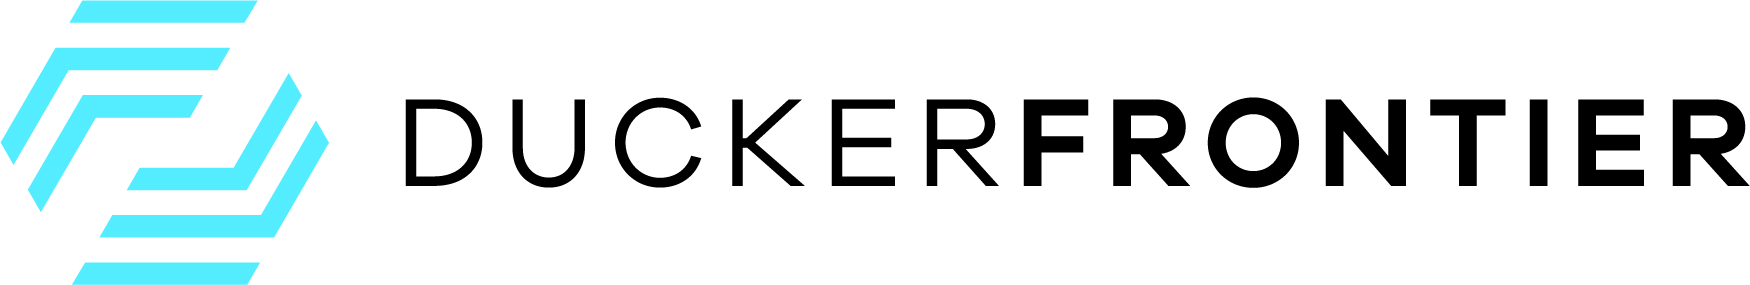 DuckerFrontier Logo-Horizontal.jpg